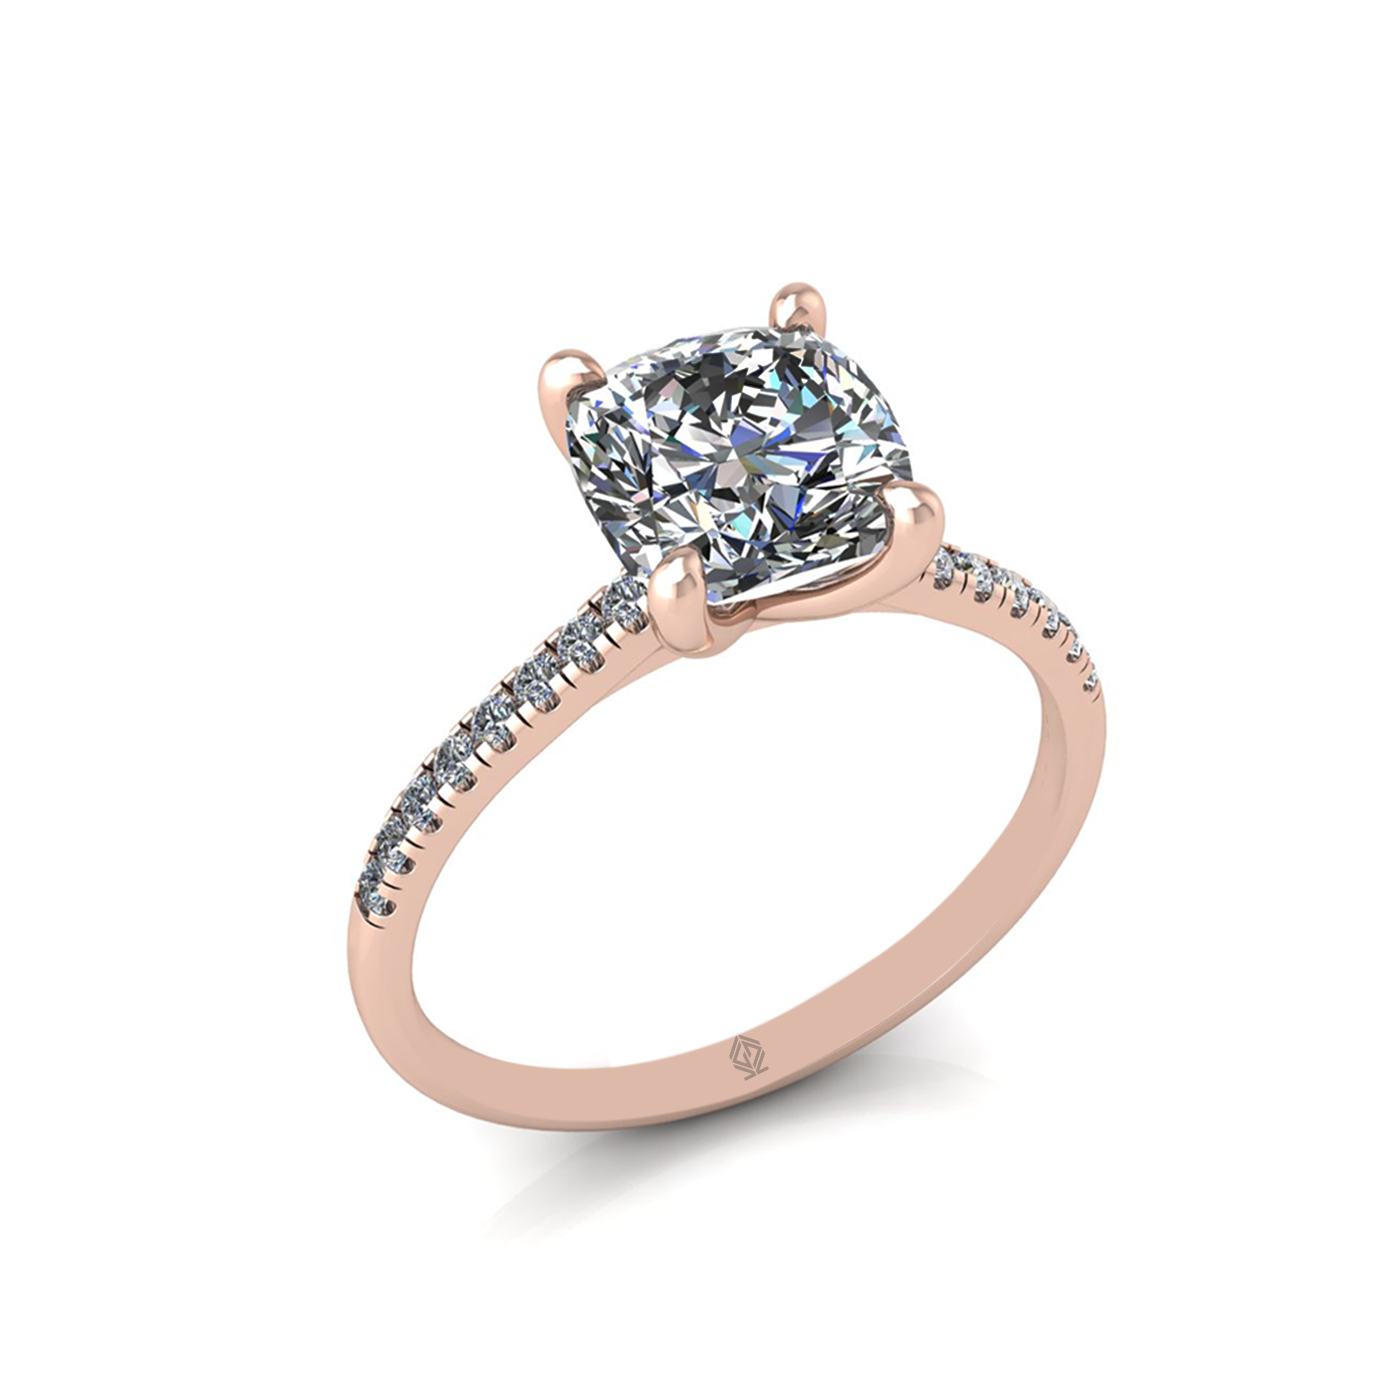 18k rose gold 2.0ct 4 prongs cushion cut diamond engagement ring with whisper thin pavÉ set band